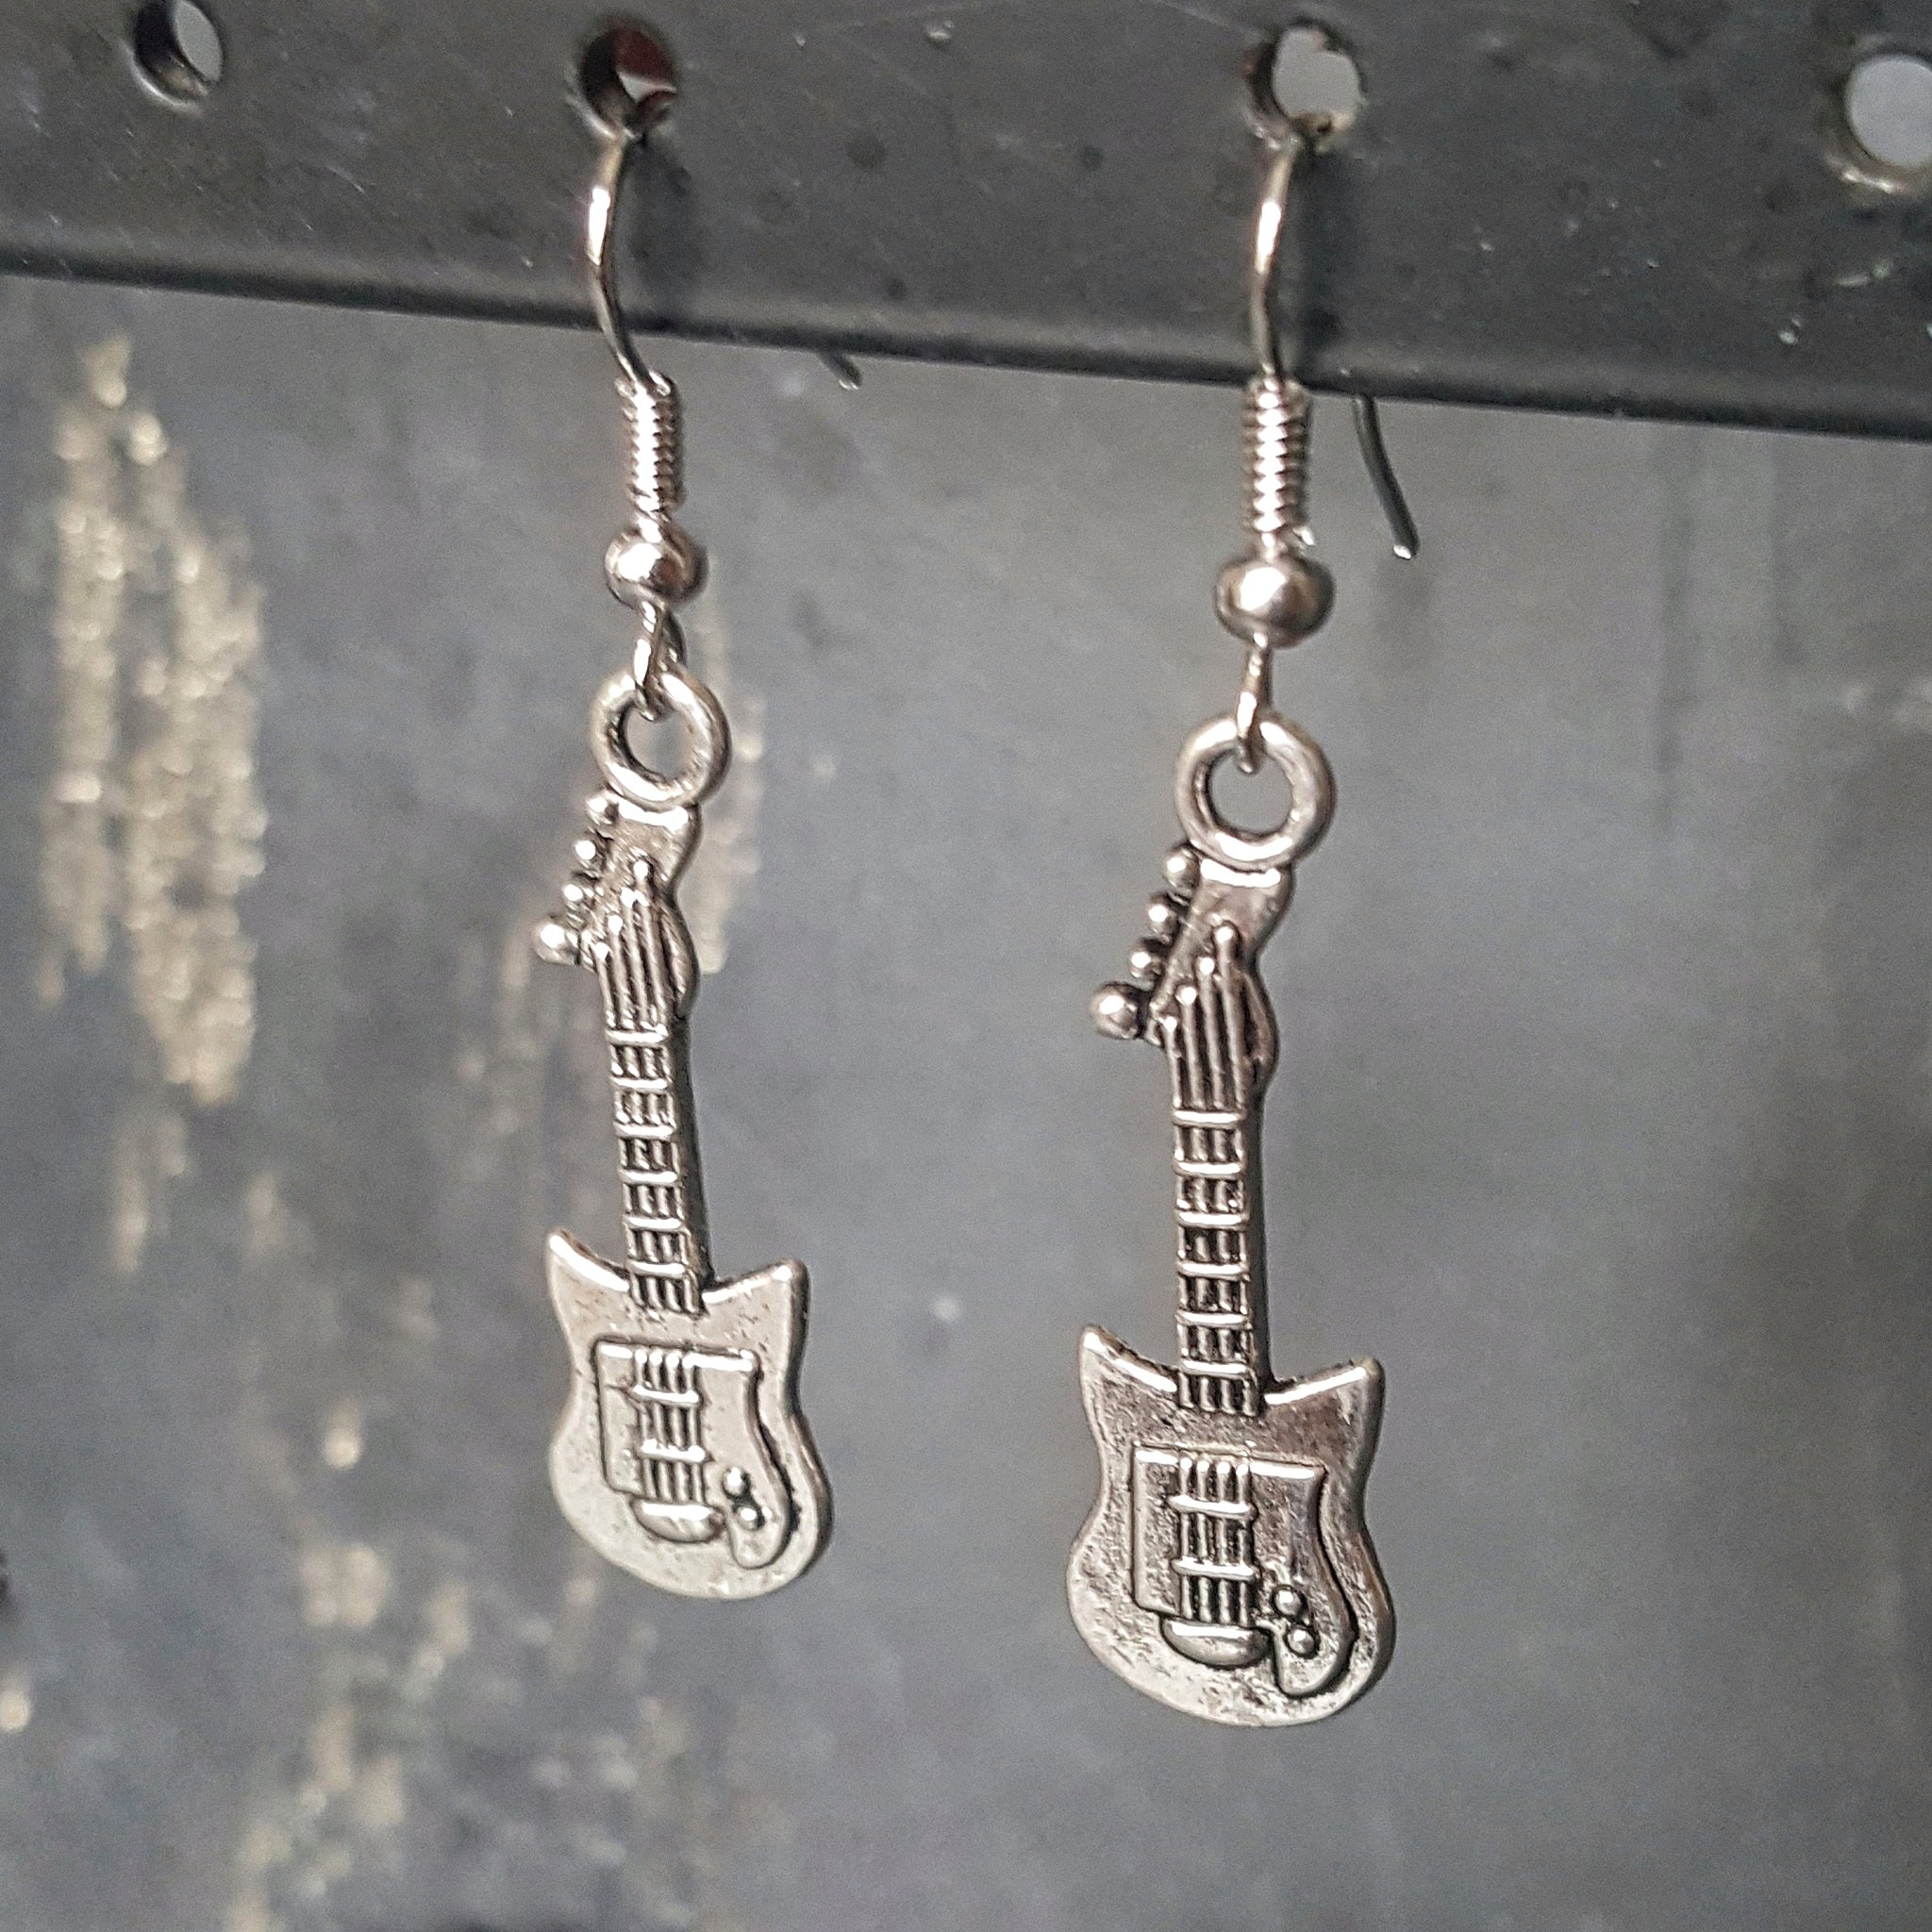 Silver Guitar Earrings Gift Idea for Guitarist - DRAVYNMOOR